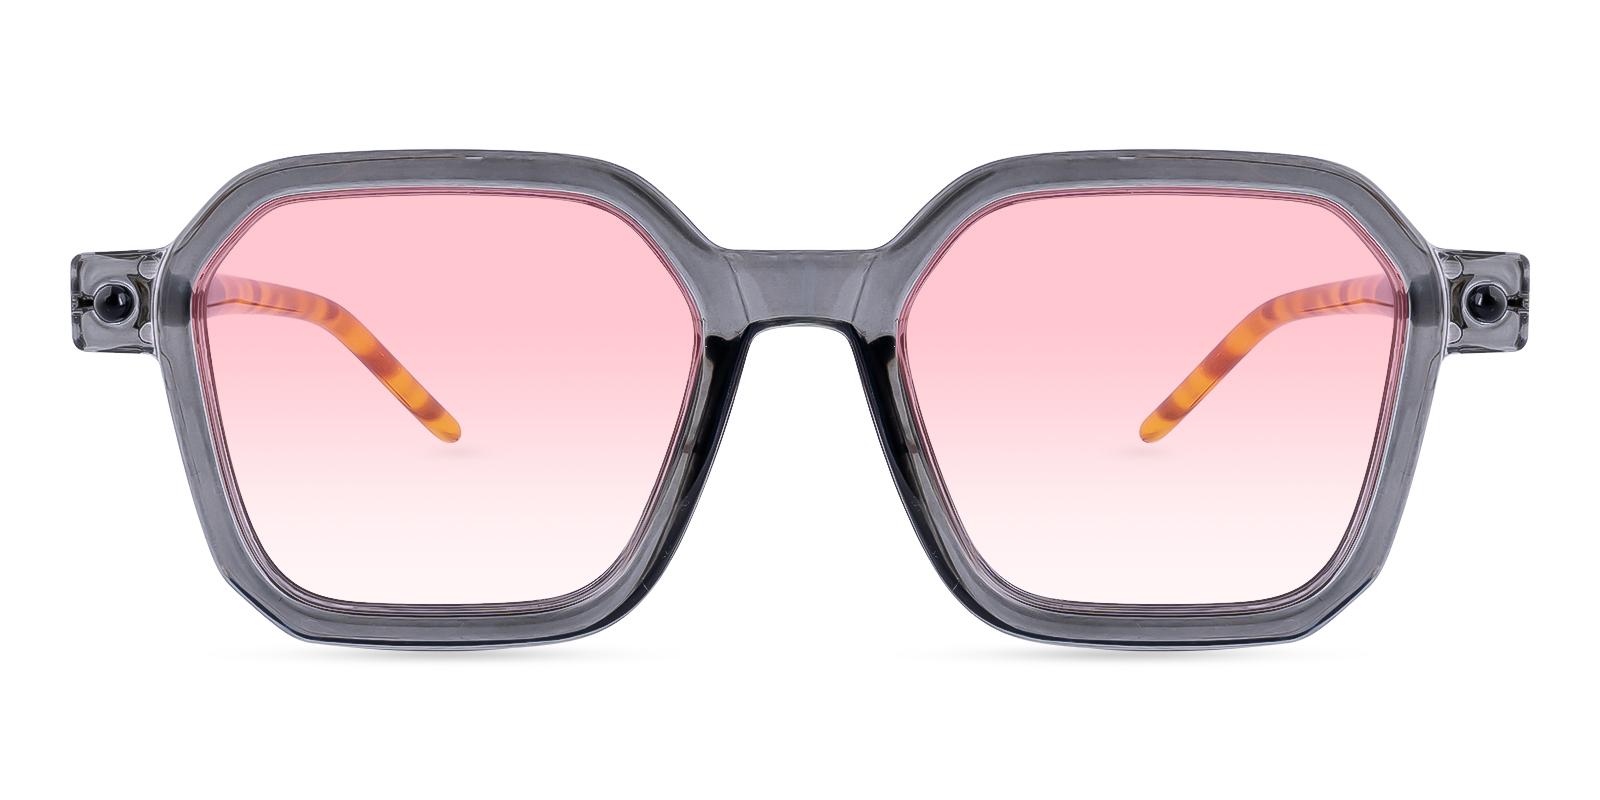 Voracish Gray Plastic Sunglasses , UniversalBridgeFit Frames from ABBE Glasses